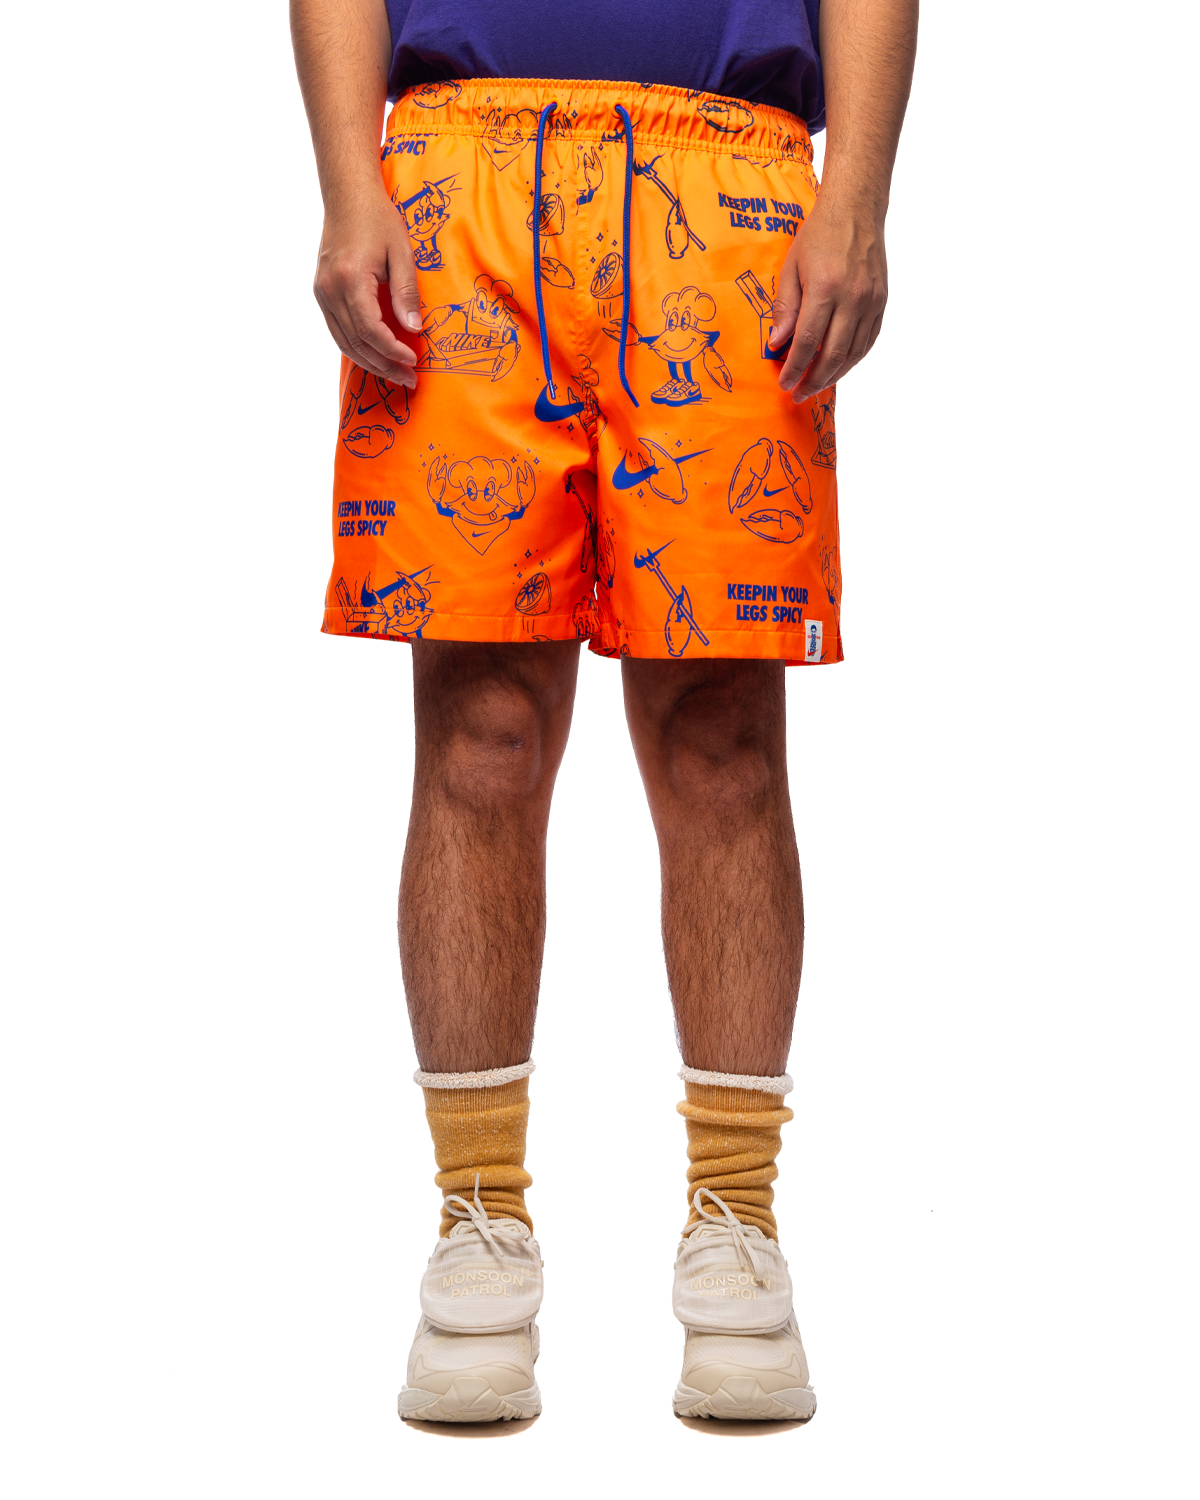 Club Shorts Total Orange